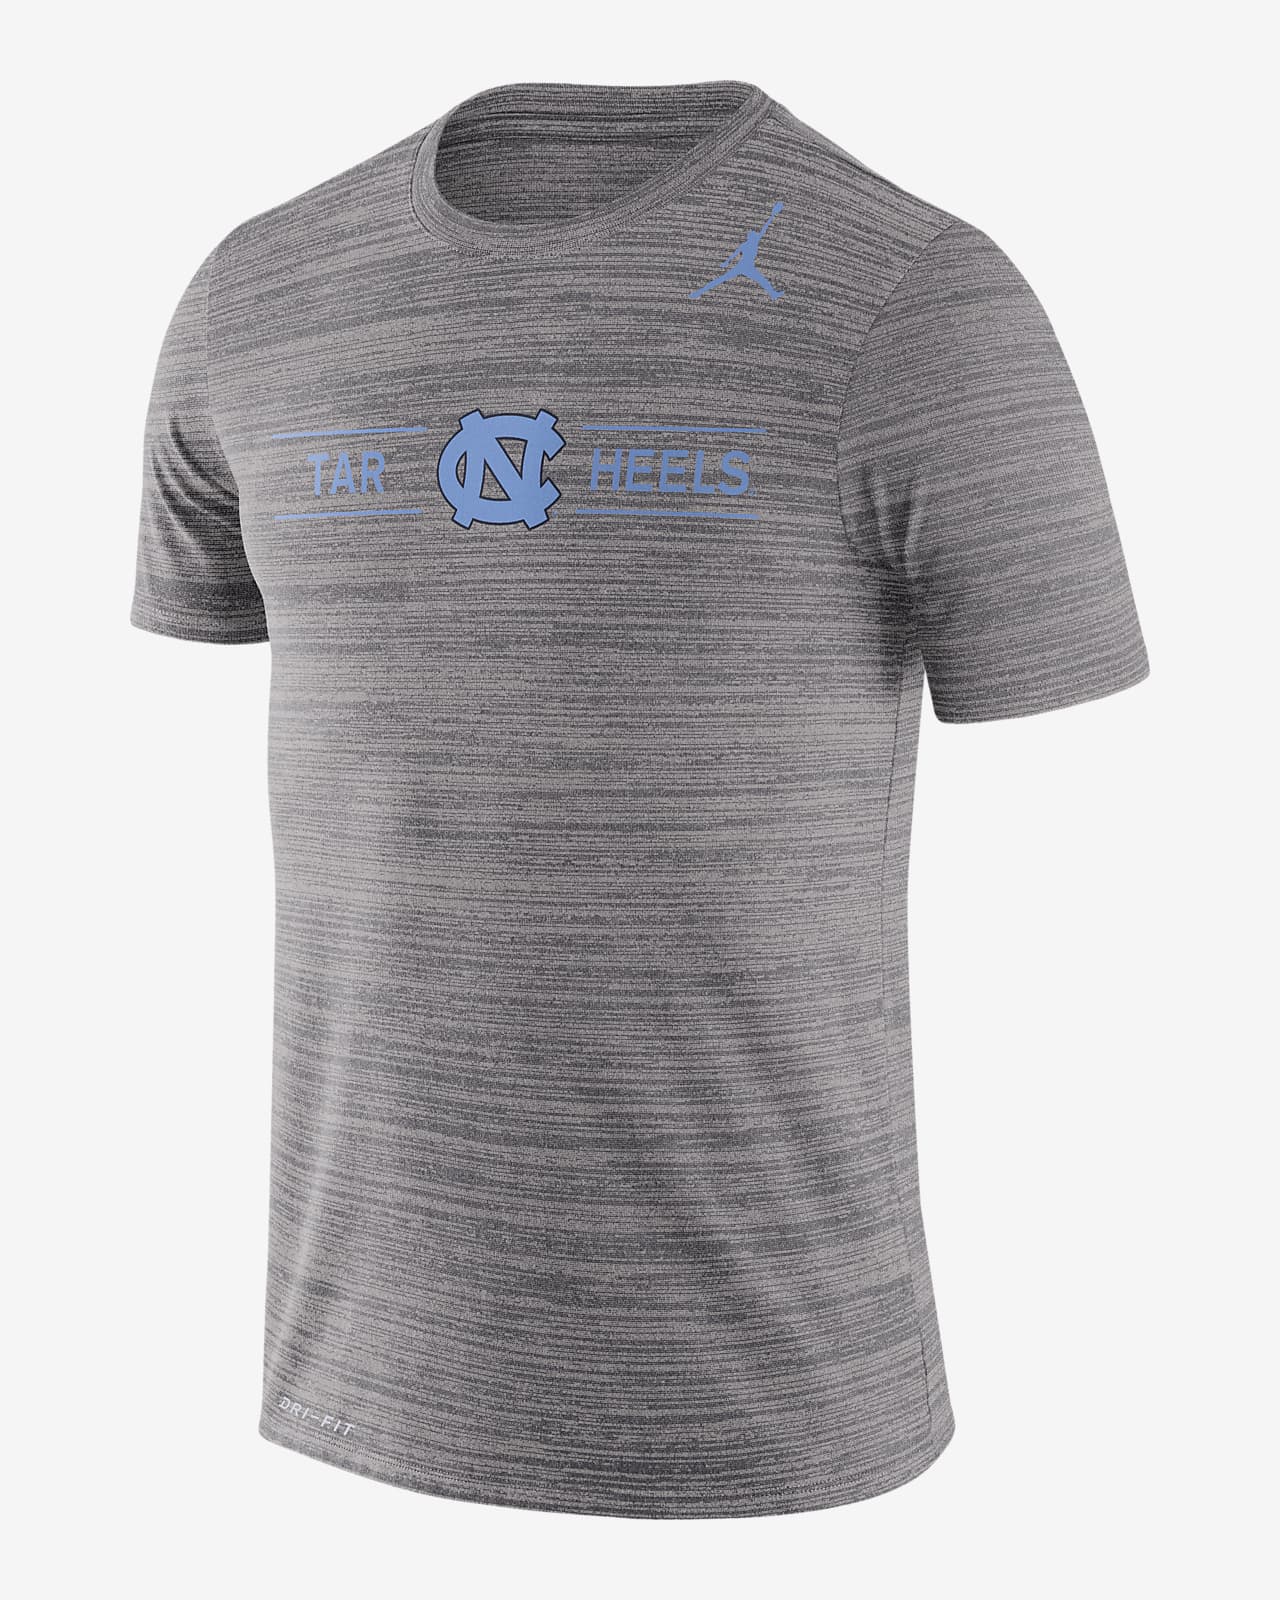 Jordan College Dri-FIT Velocity (UNC) Men's T-Shirt